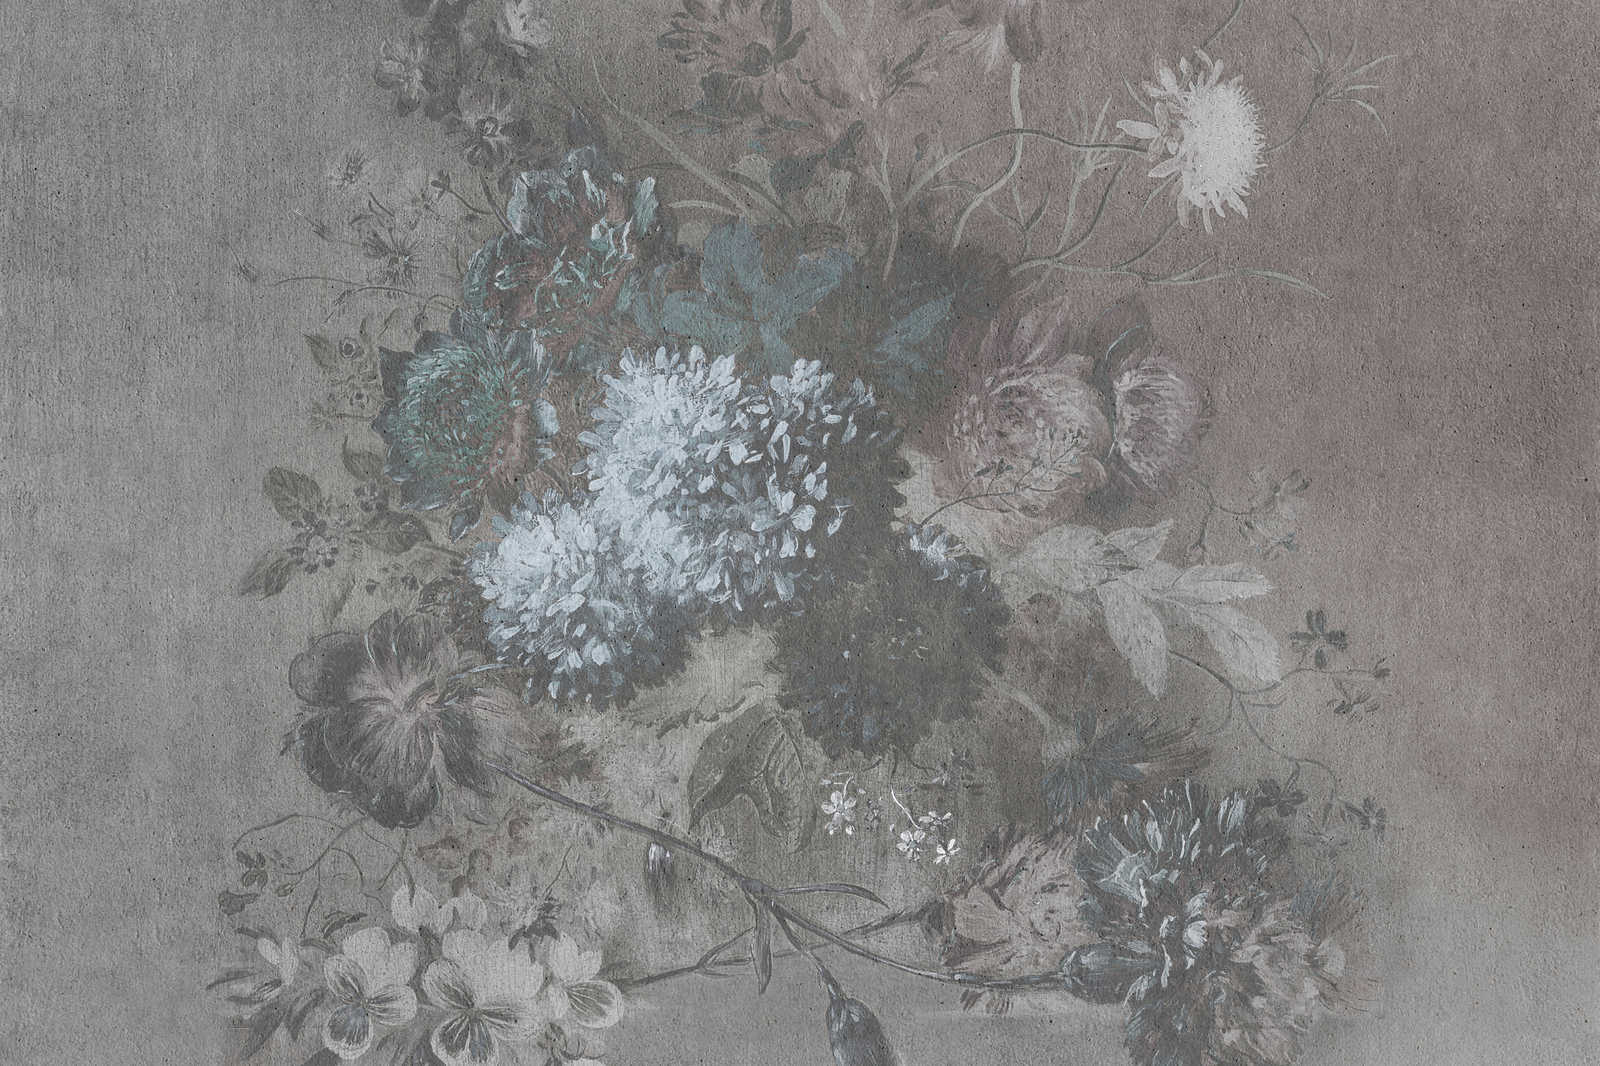             Leinwandbild Blumen-Bouquet im Vintage Stil | blau, grau – 0,90 m x 0,60 m
        